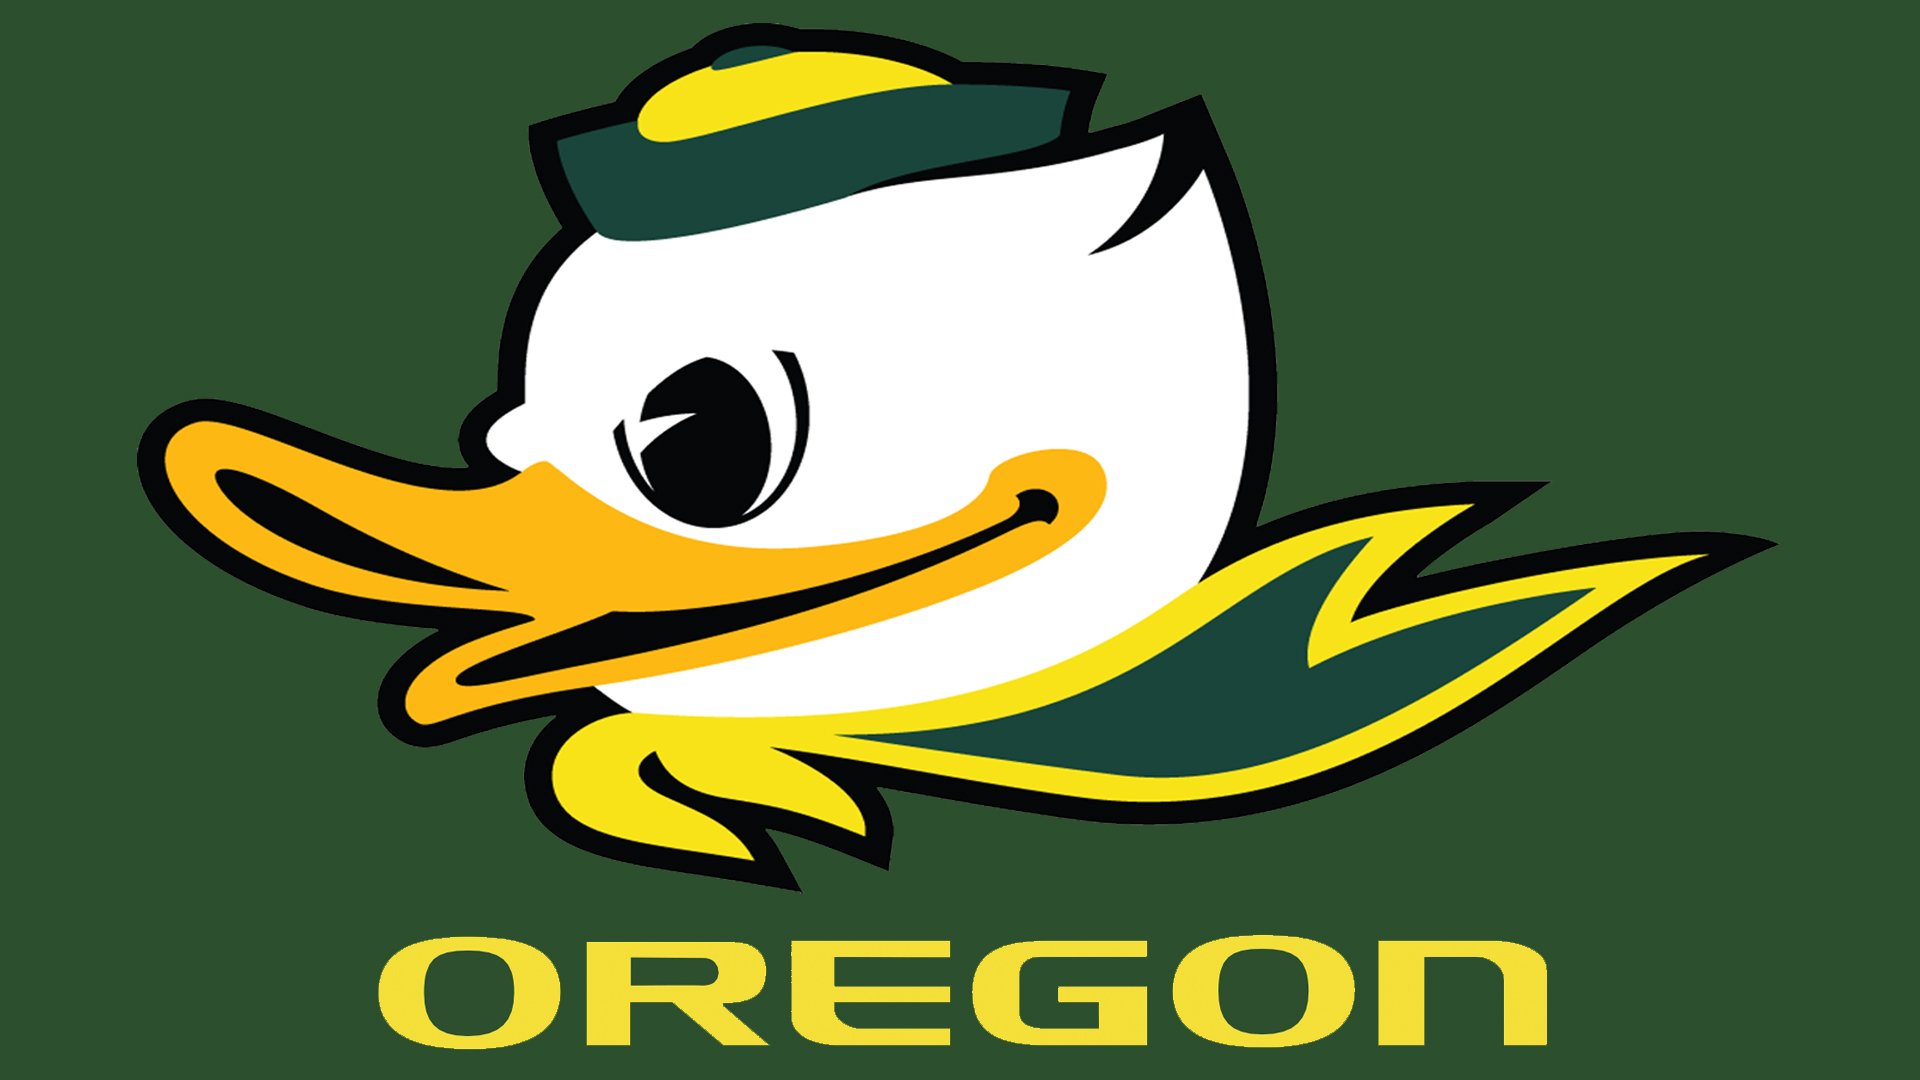 Ducks роли. Утка логотип. Уточка фирменный знаки. Oregon логотип. Эмблема утята.